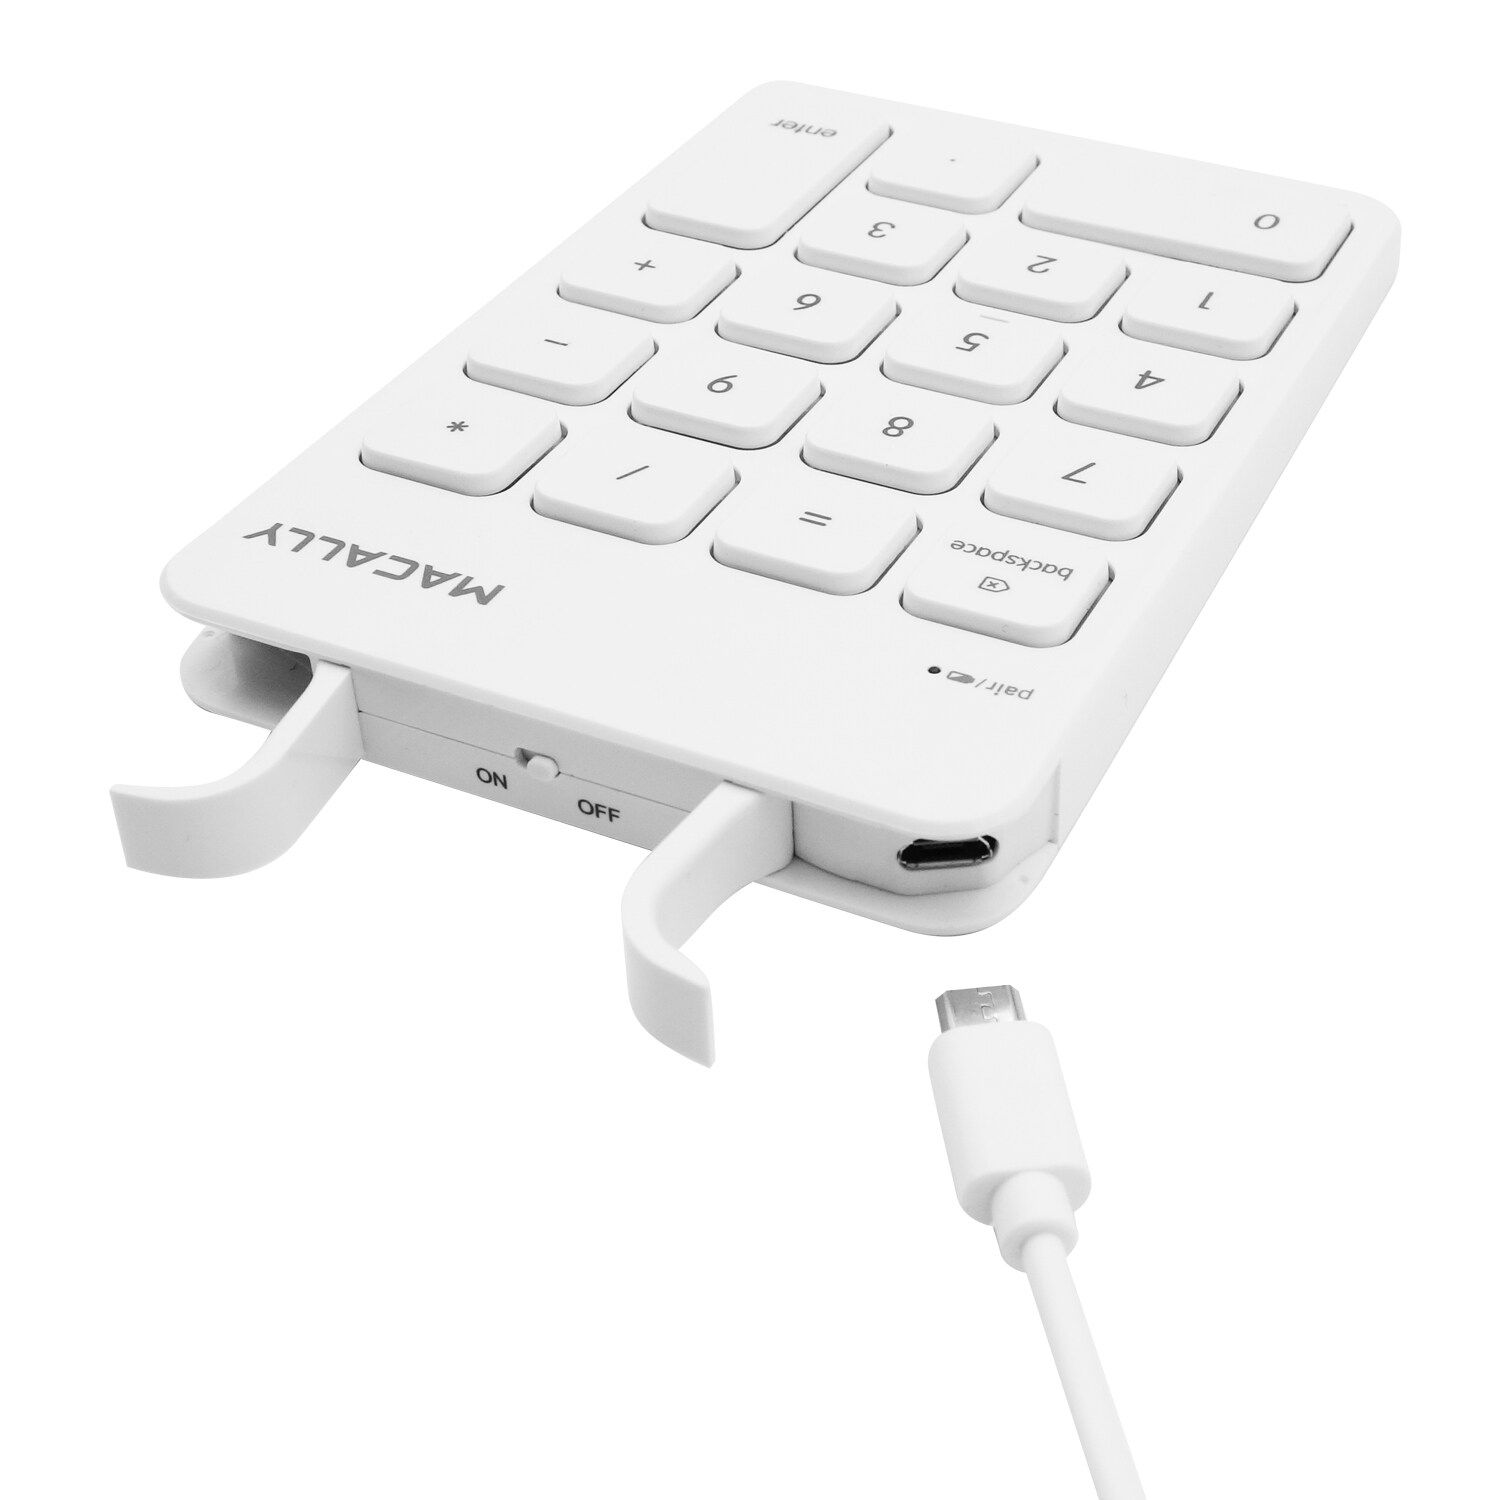 apple computer keyboard for pc amazon